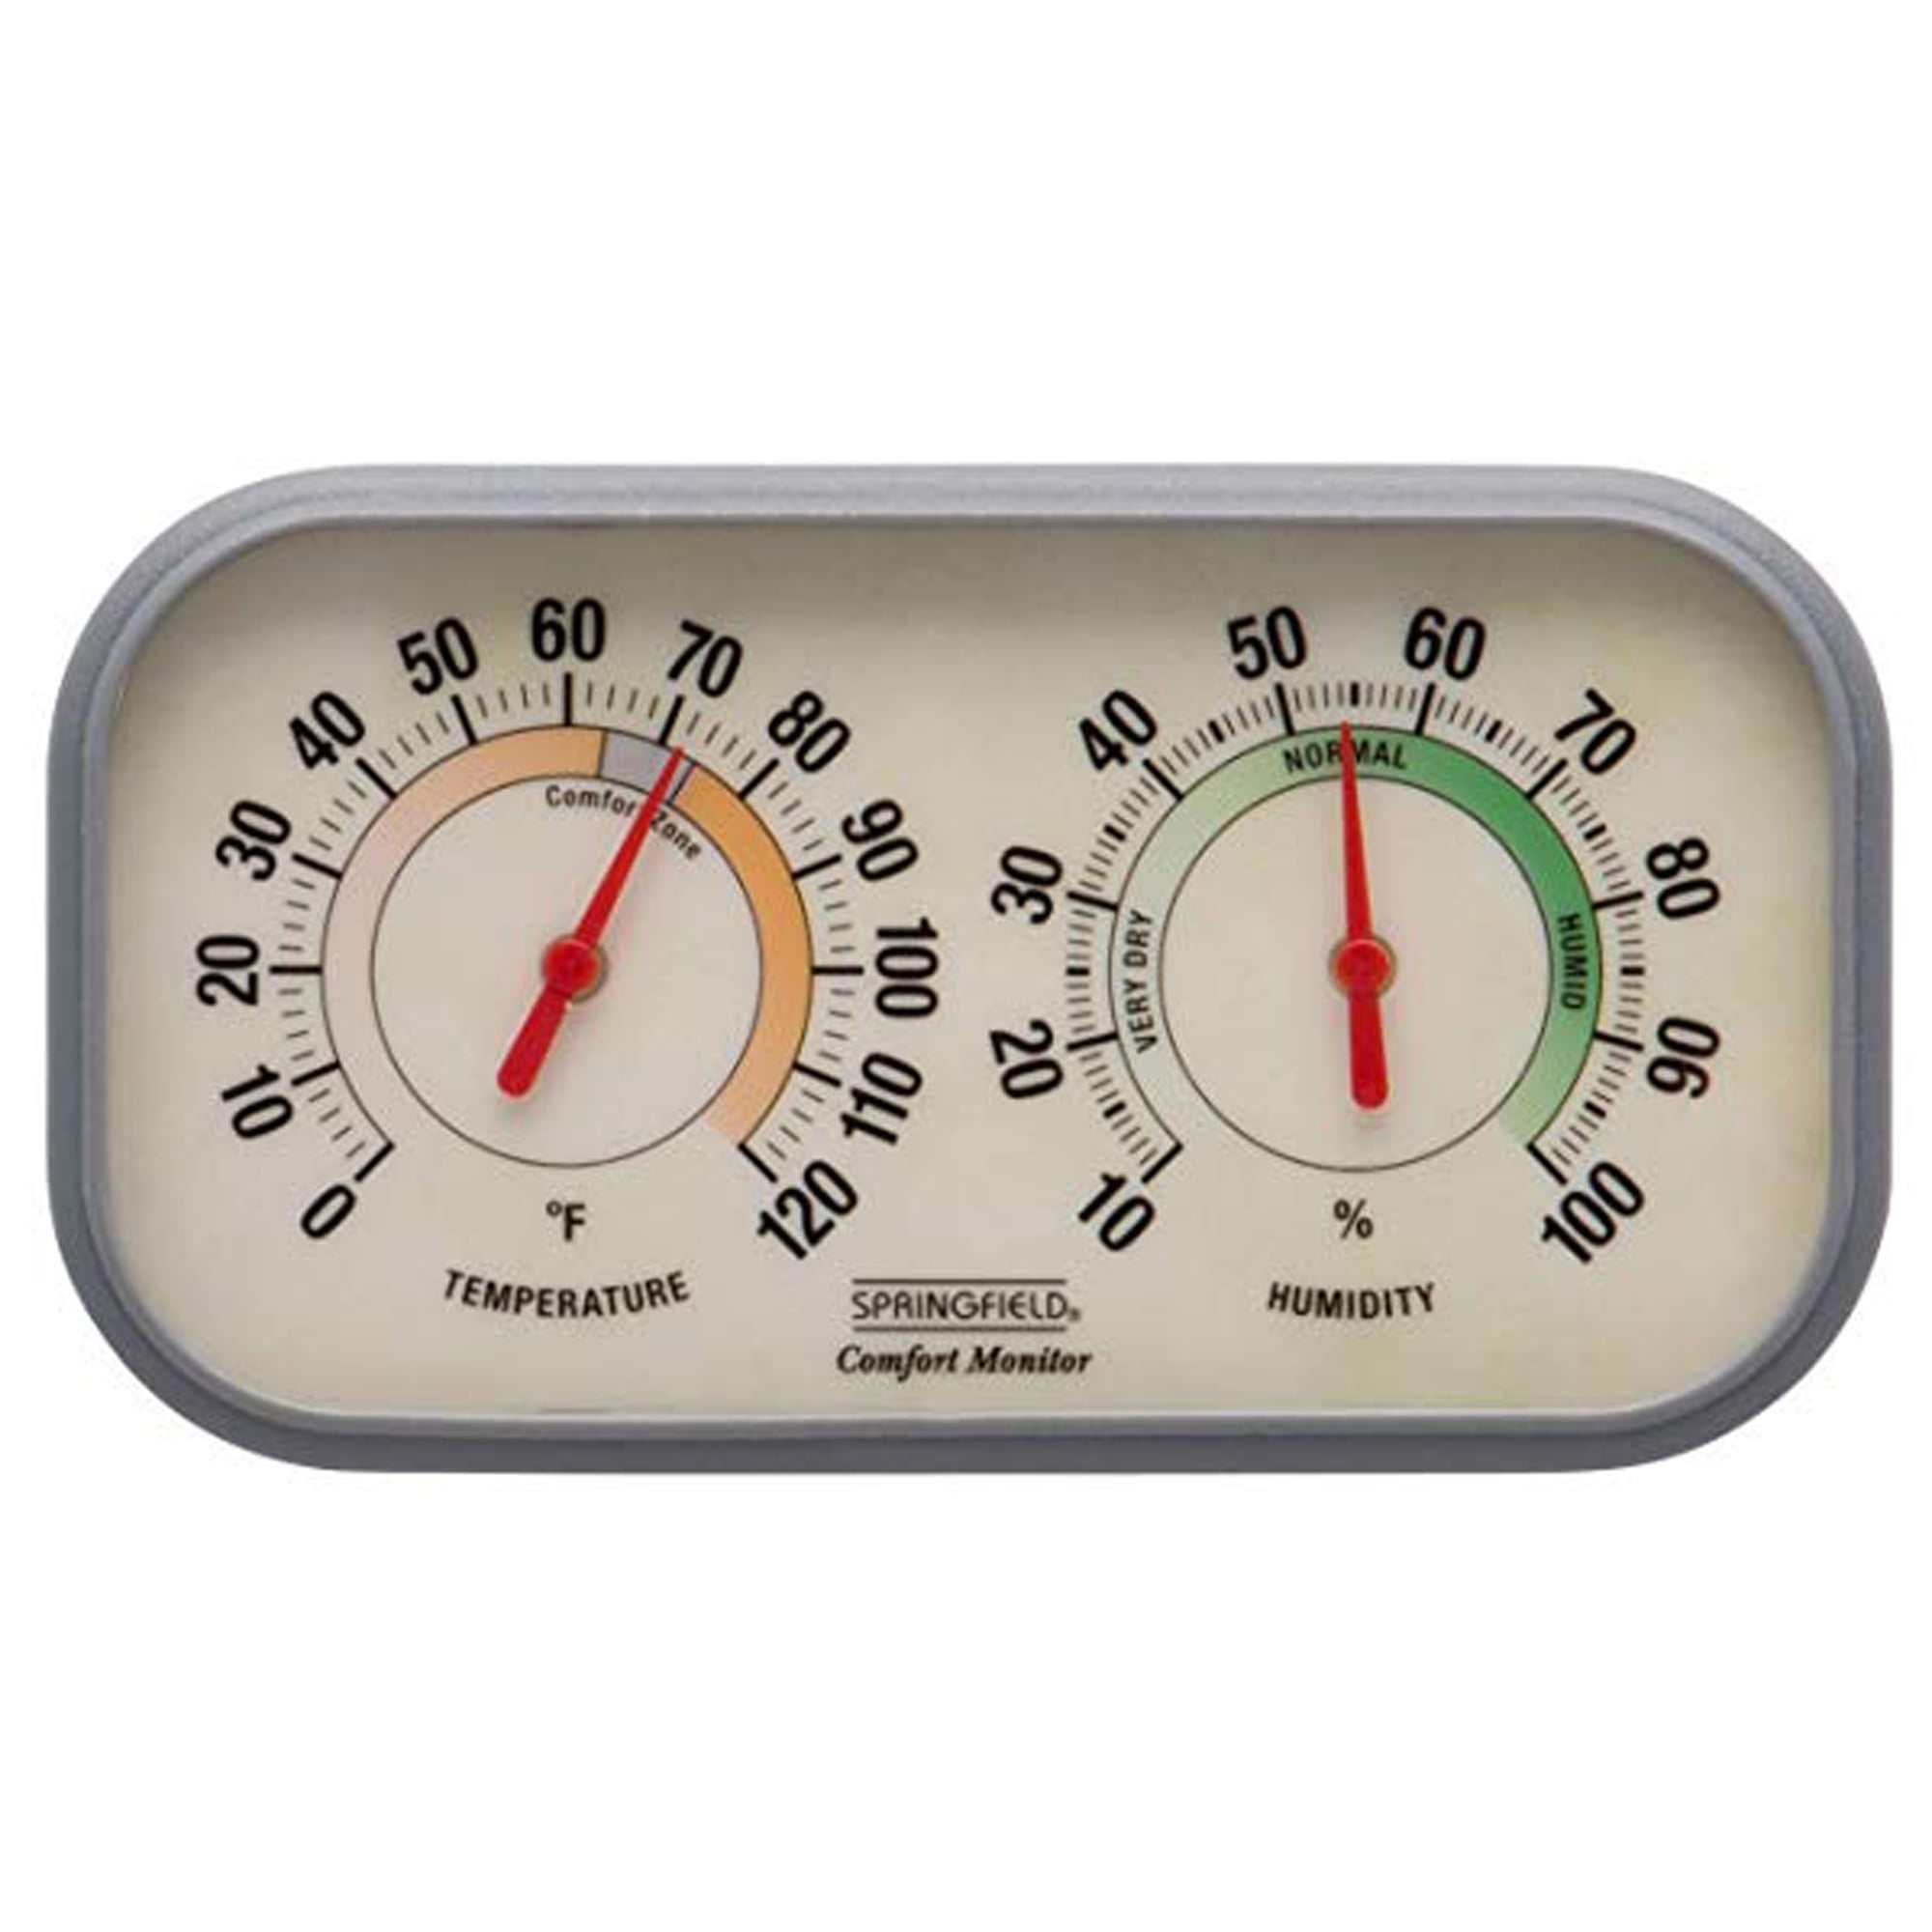 NIB Springfield Bristol Weather Station Therm Barometer Humidity Meter 885-13 